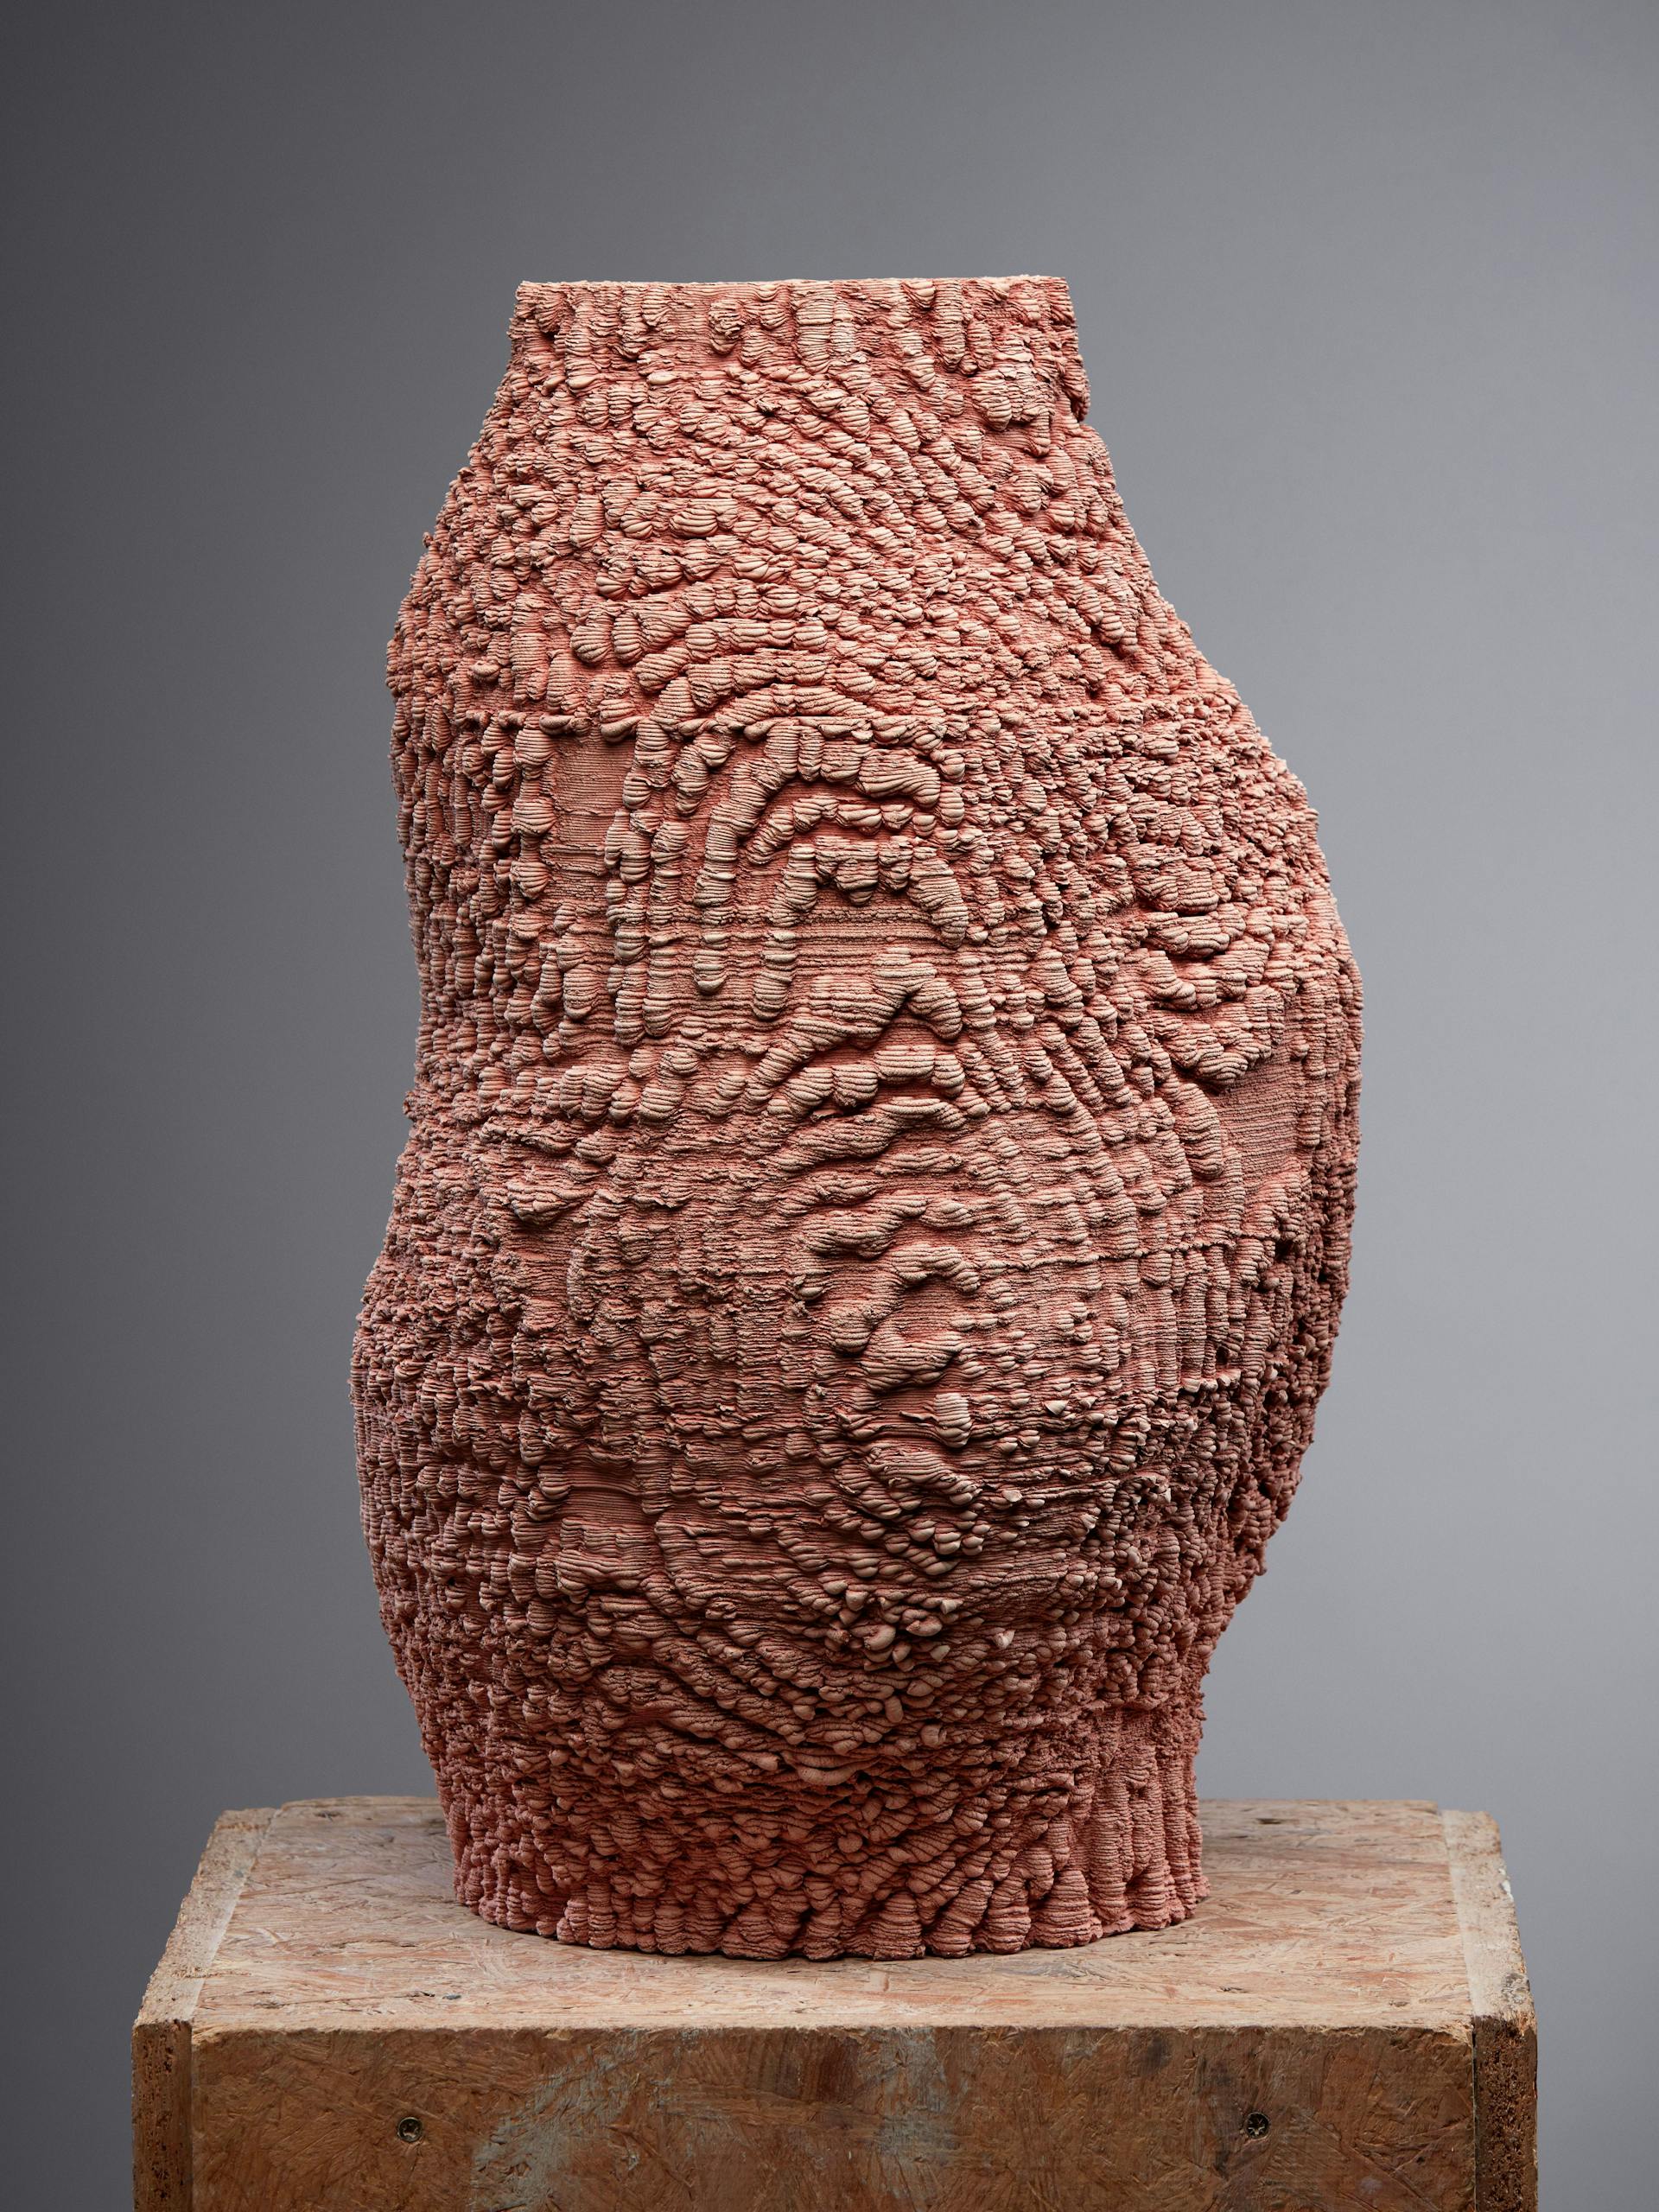 Olivier van Herpt, Functional 3D Printed Ceramics